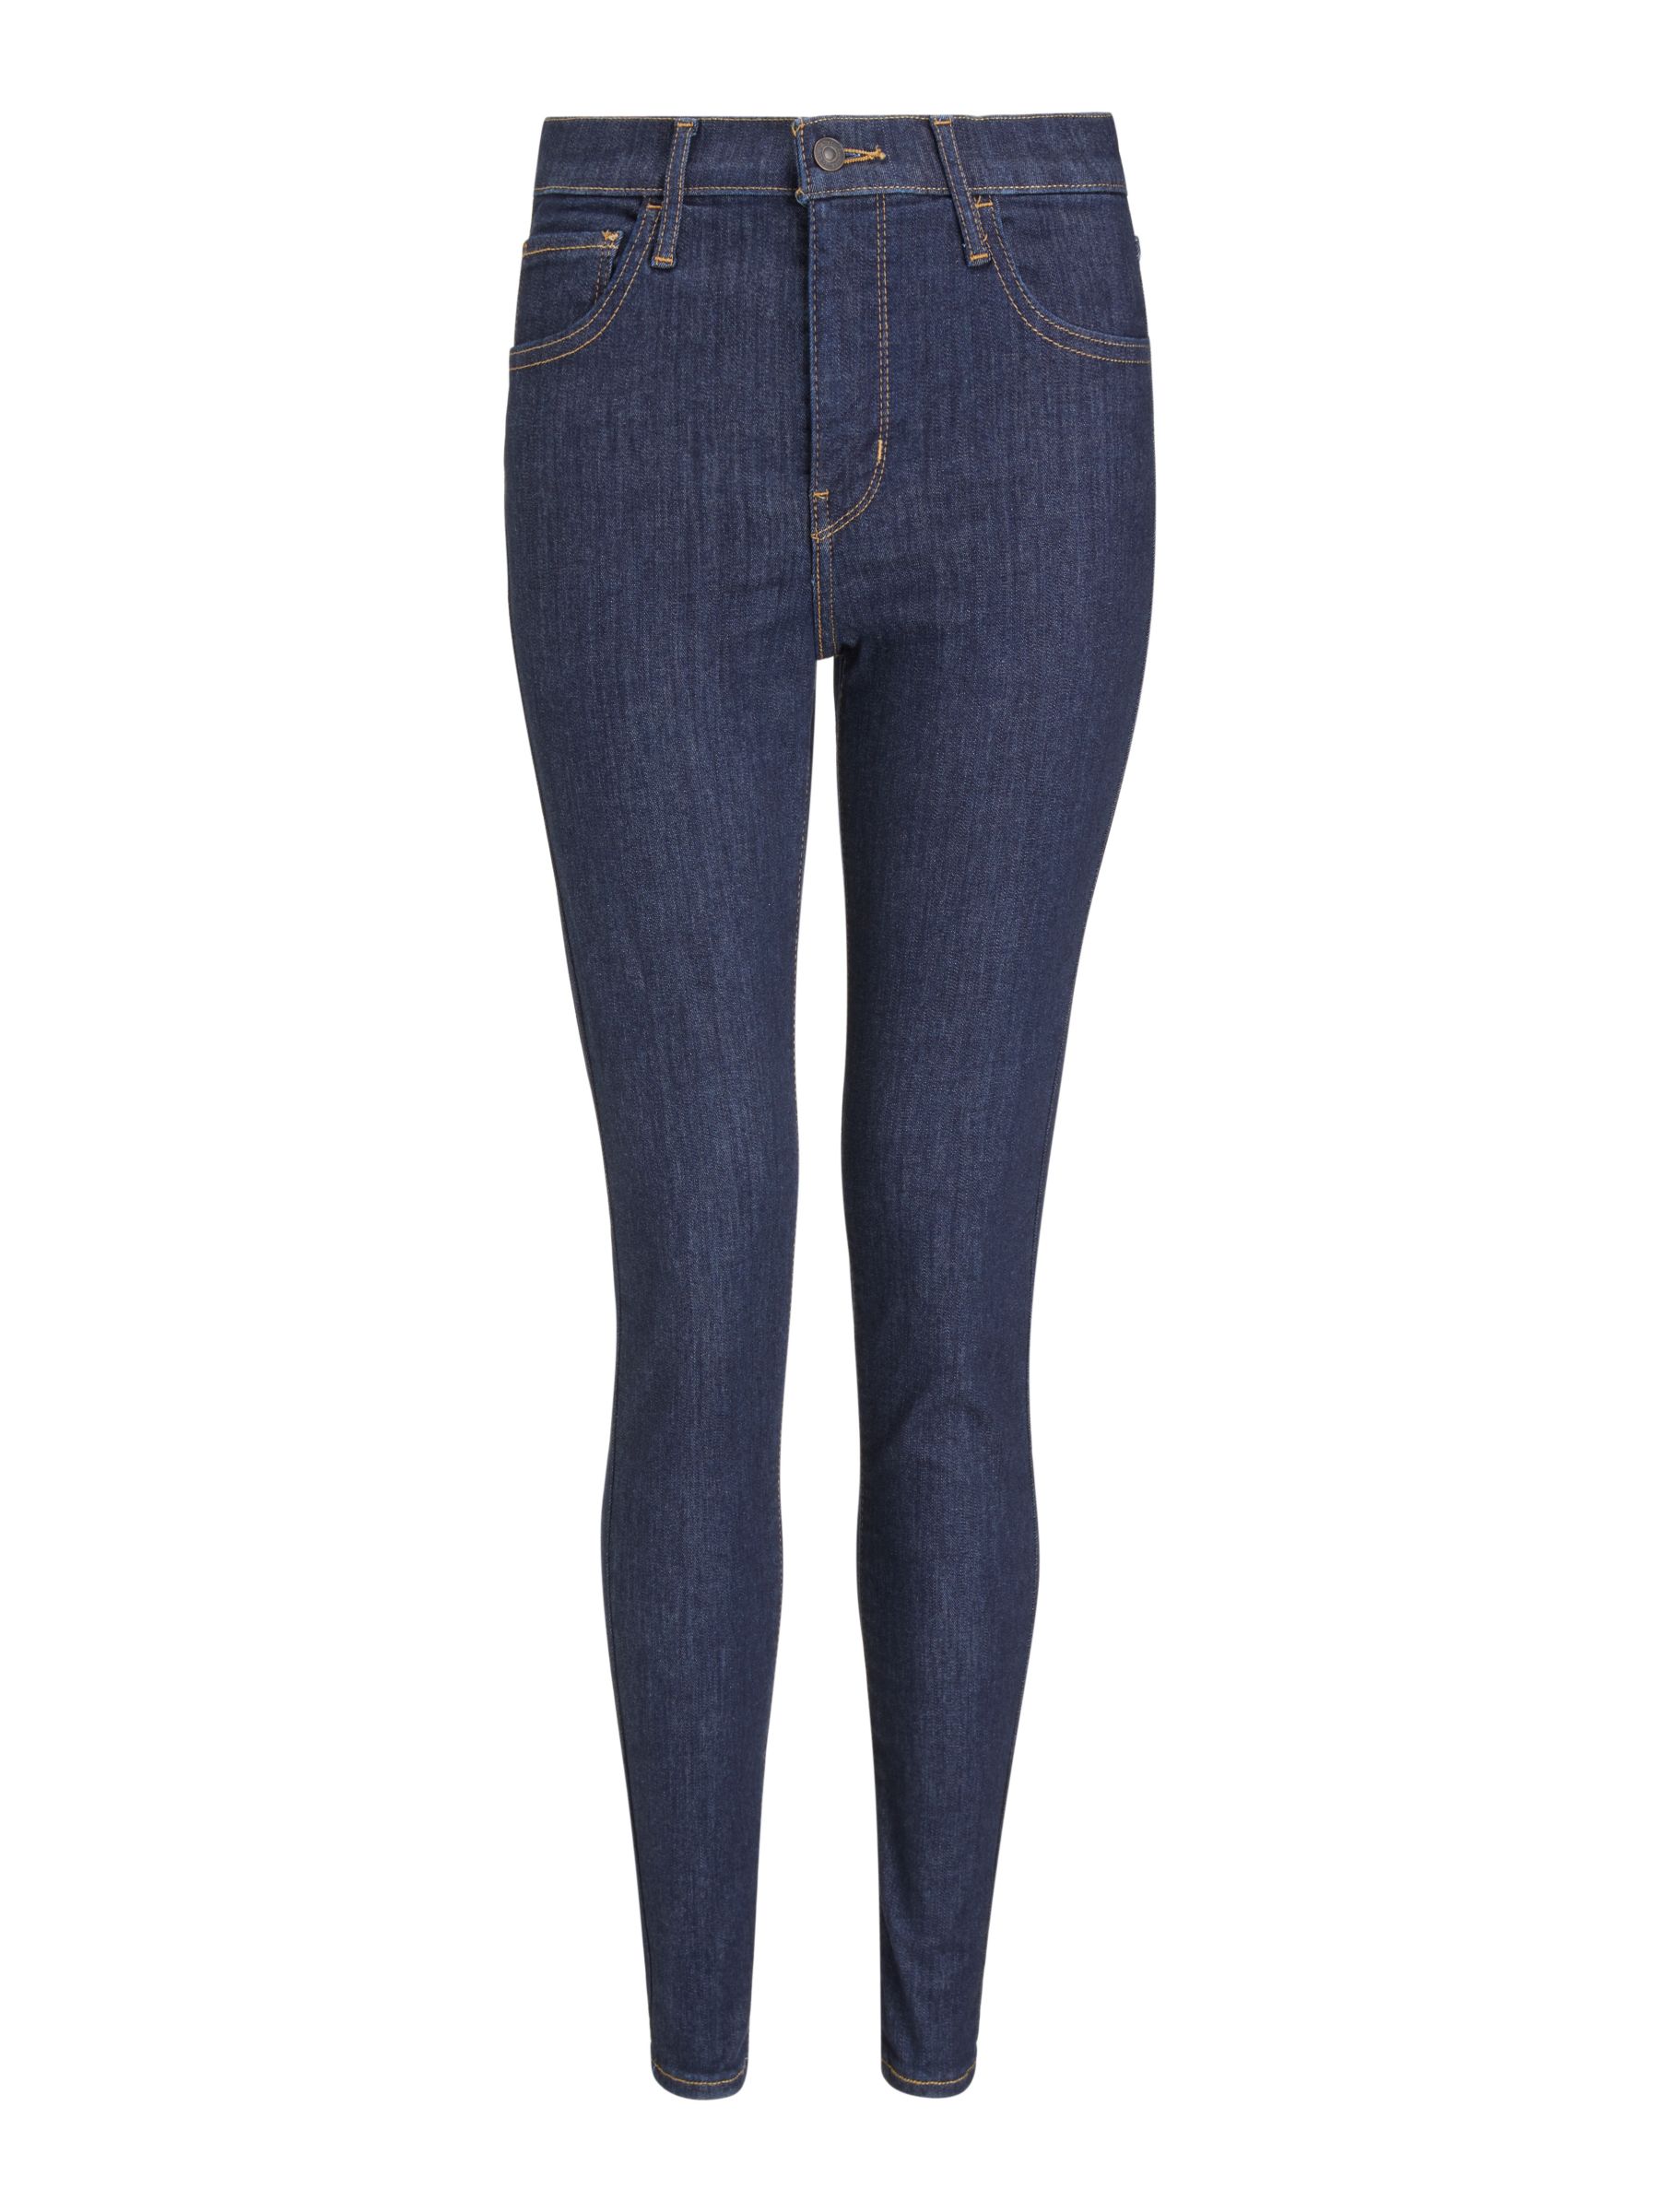 Buy Levi's 720 High Rise Super Skinny Jeans Online at johnlewis.com